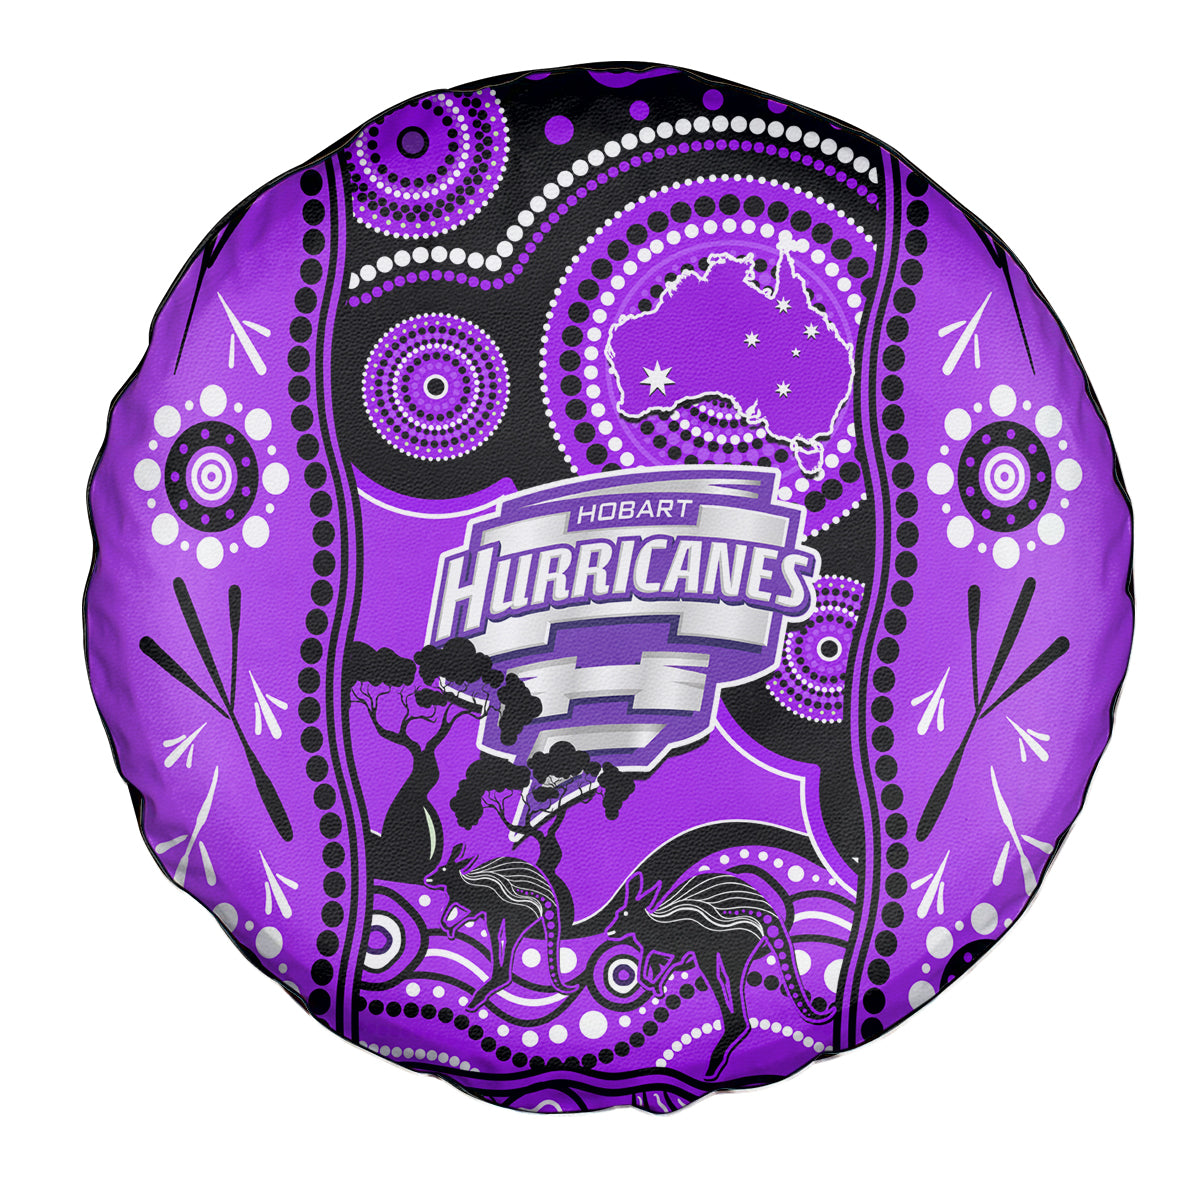 hobart-hurricanes-cricket-spare-tire-cover-happy-australia-day-aboriginal-art